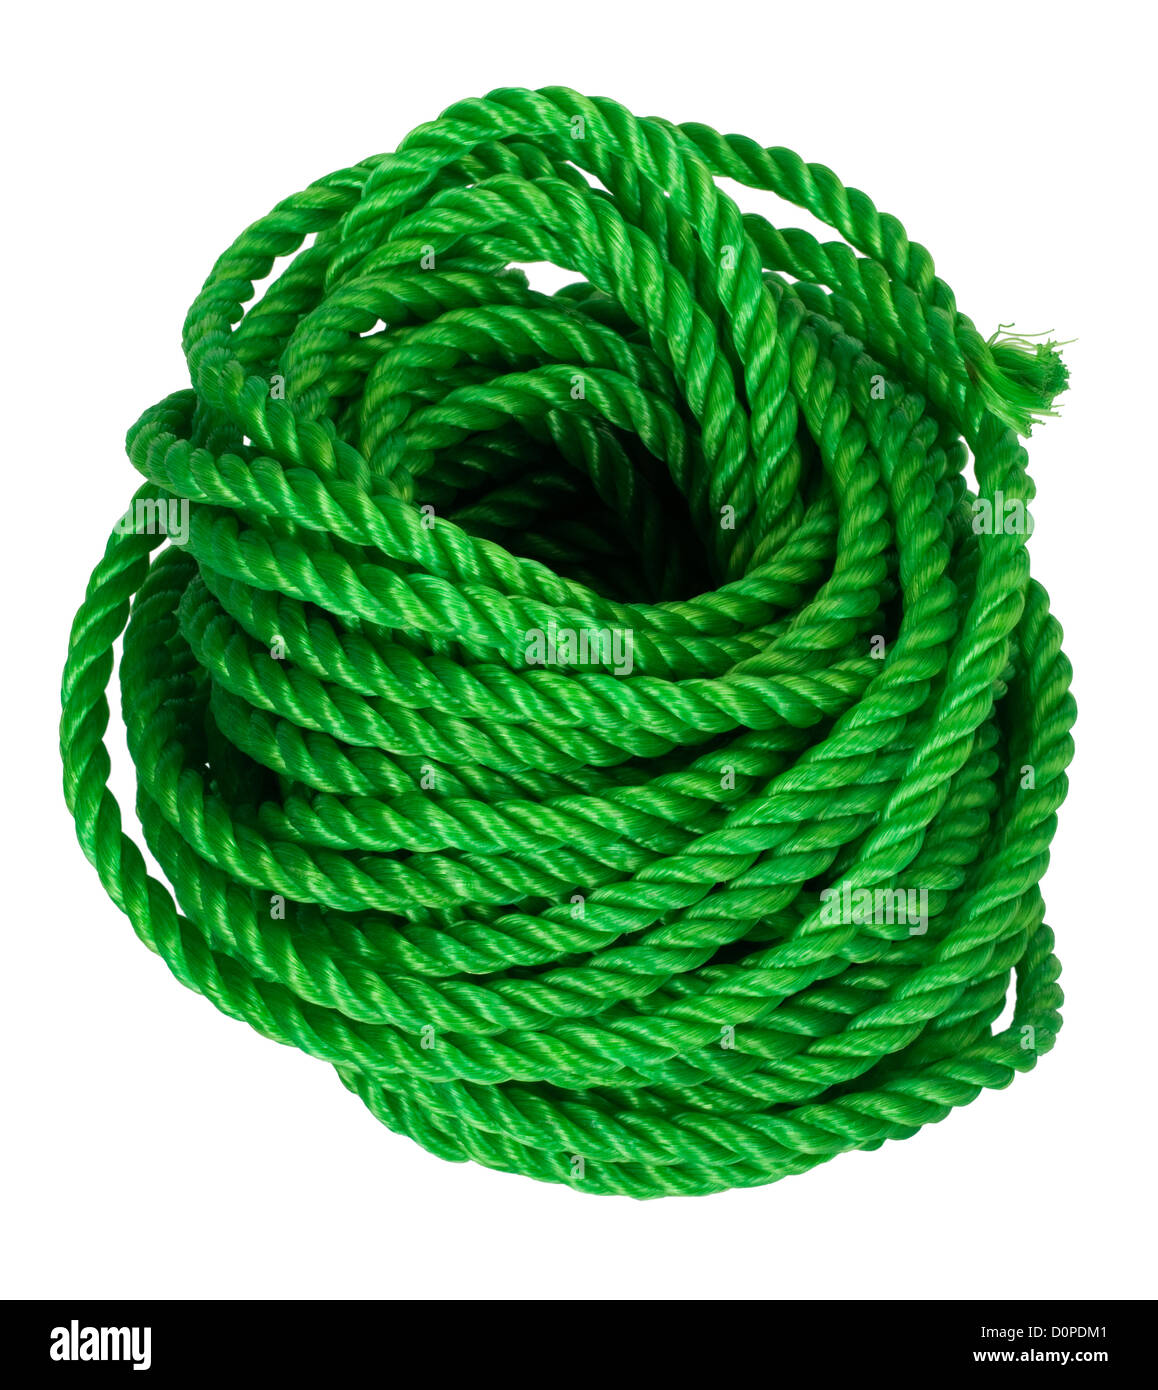 https://c8.alamy.com/comp/D0PDM1/close-up-of-a-bundle-of-plastic-rope-D0PDM1.jpg